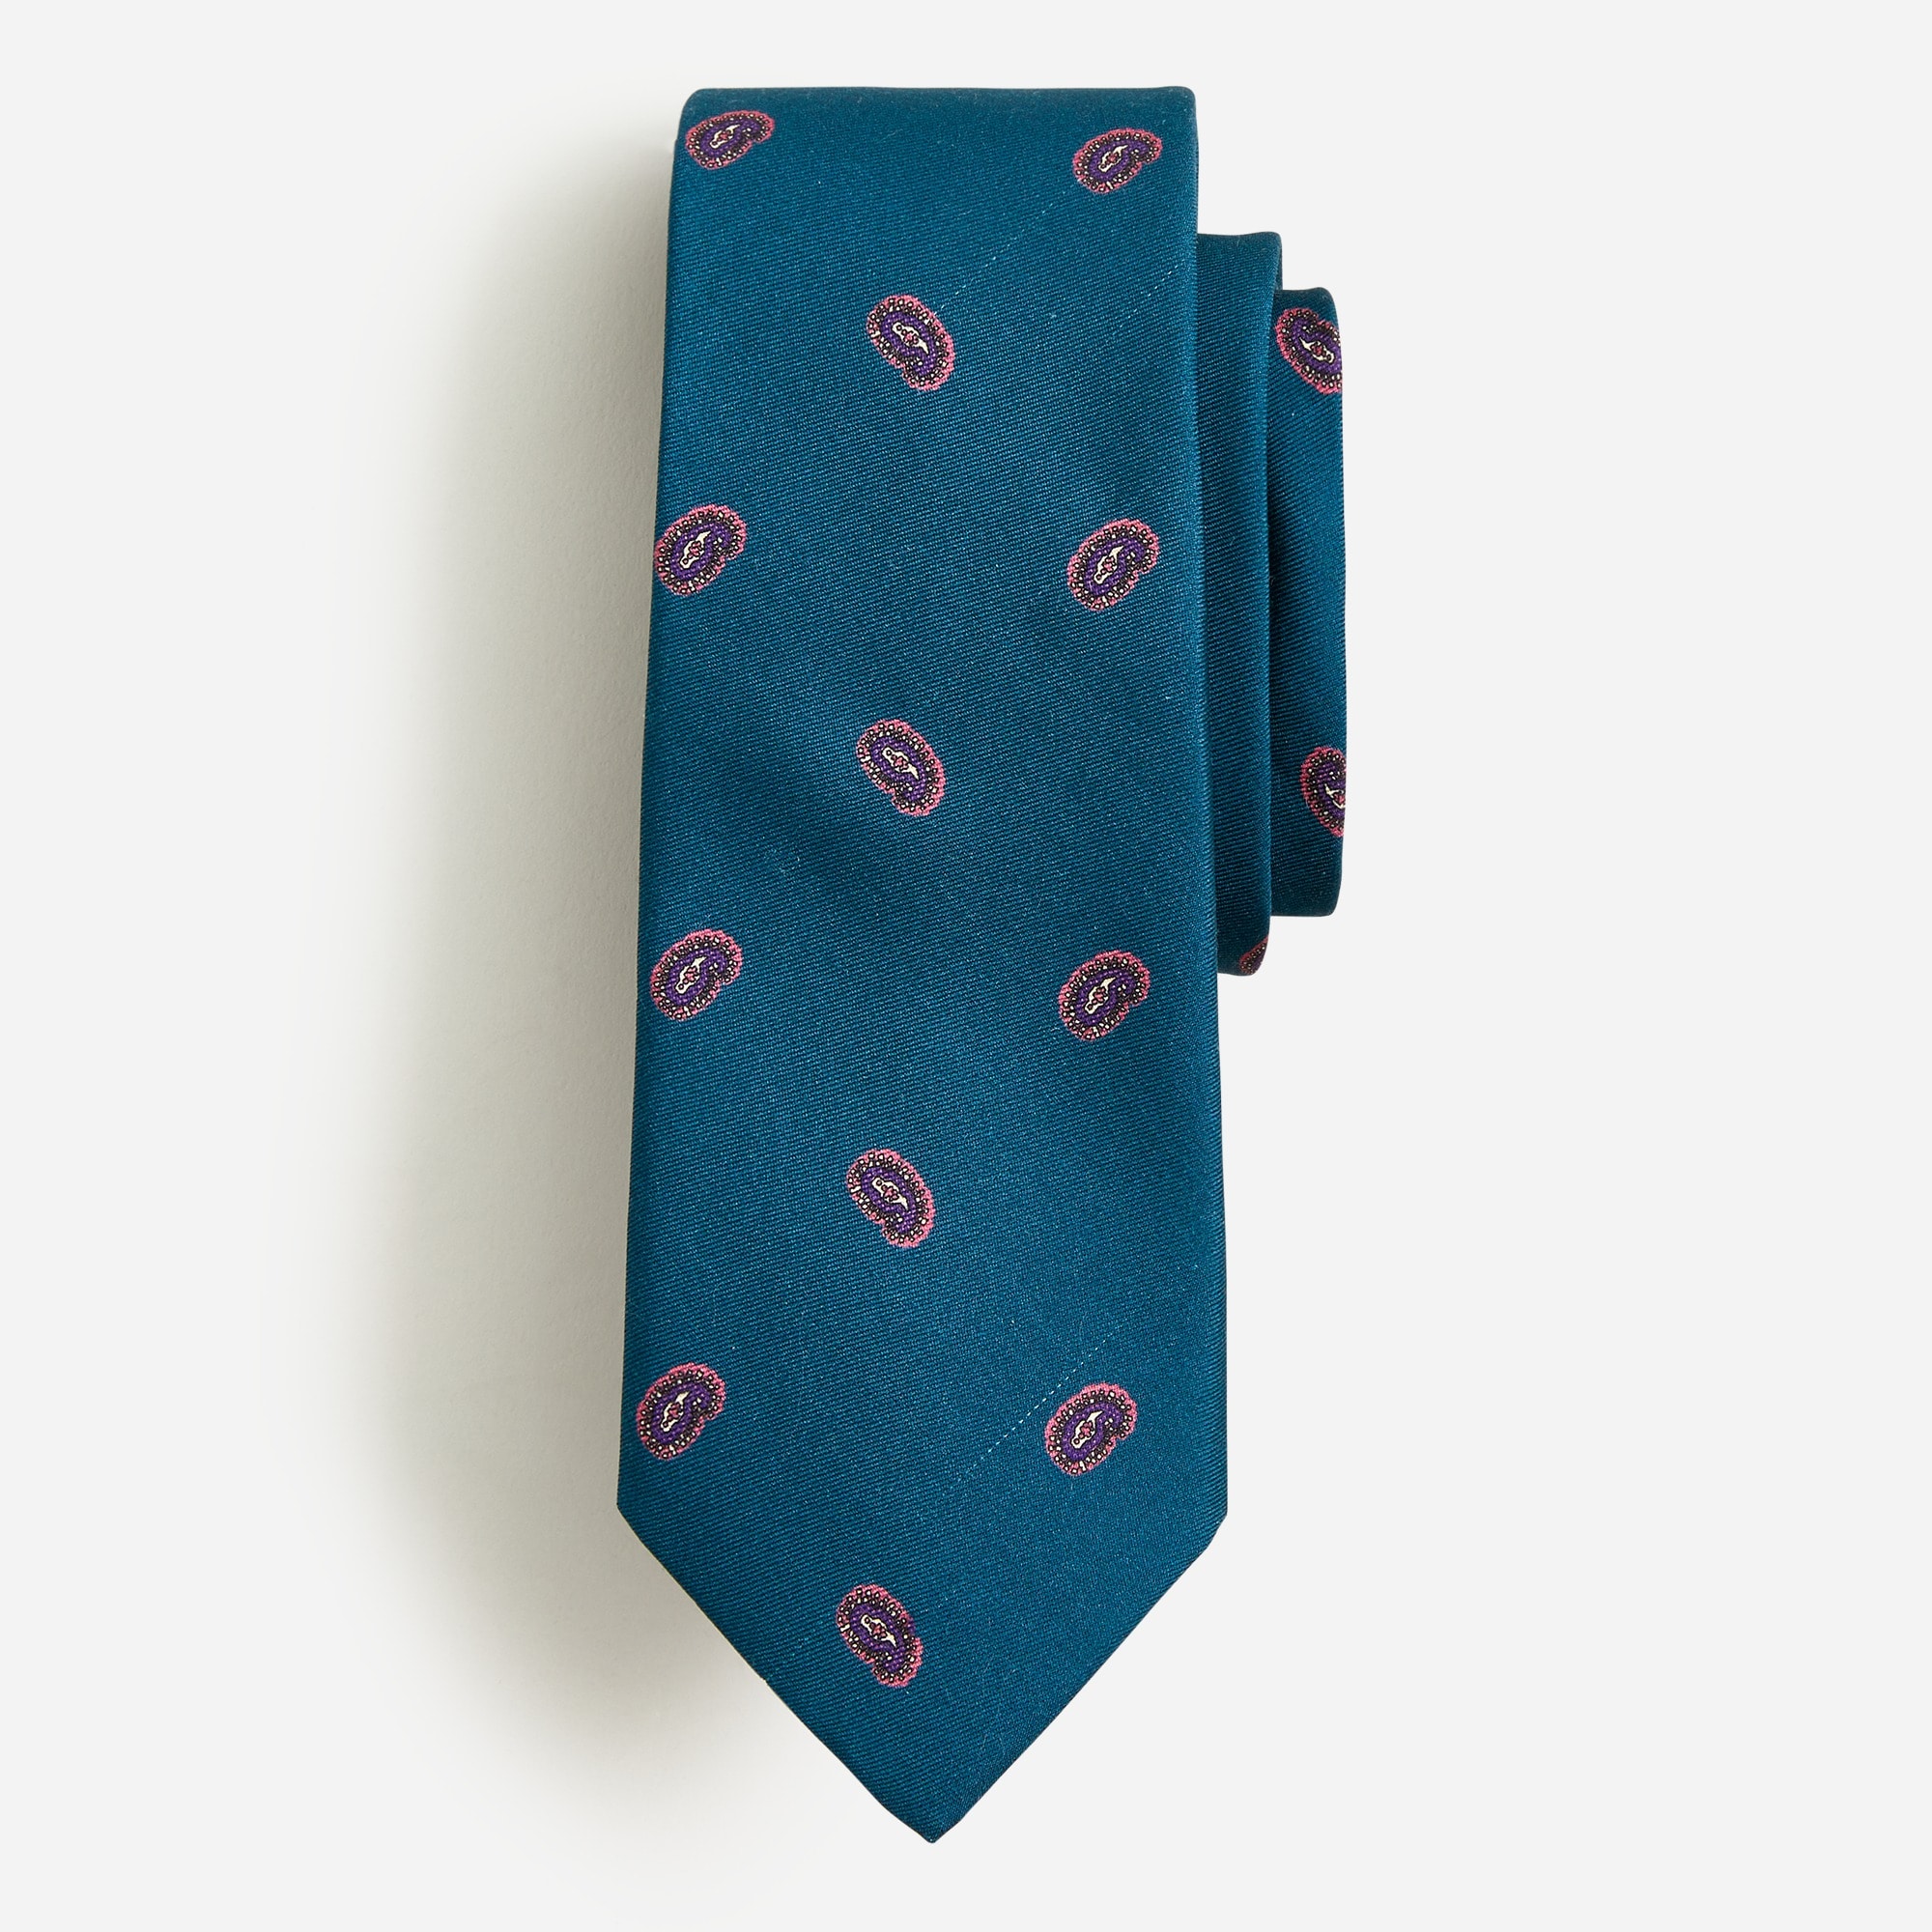  English silk tie in paisley